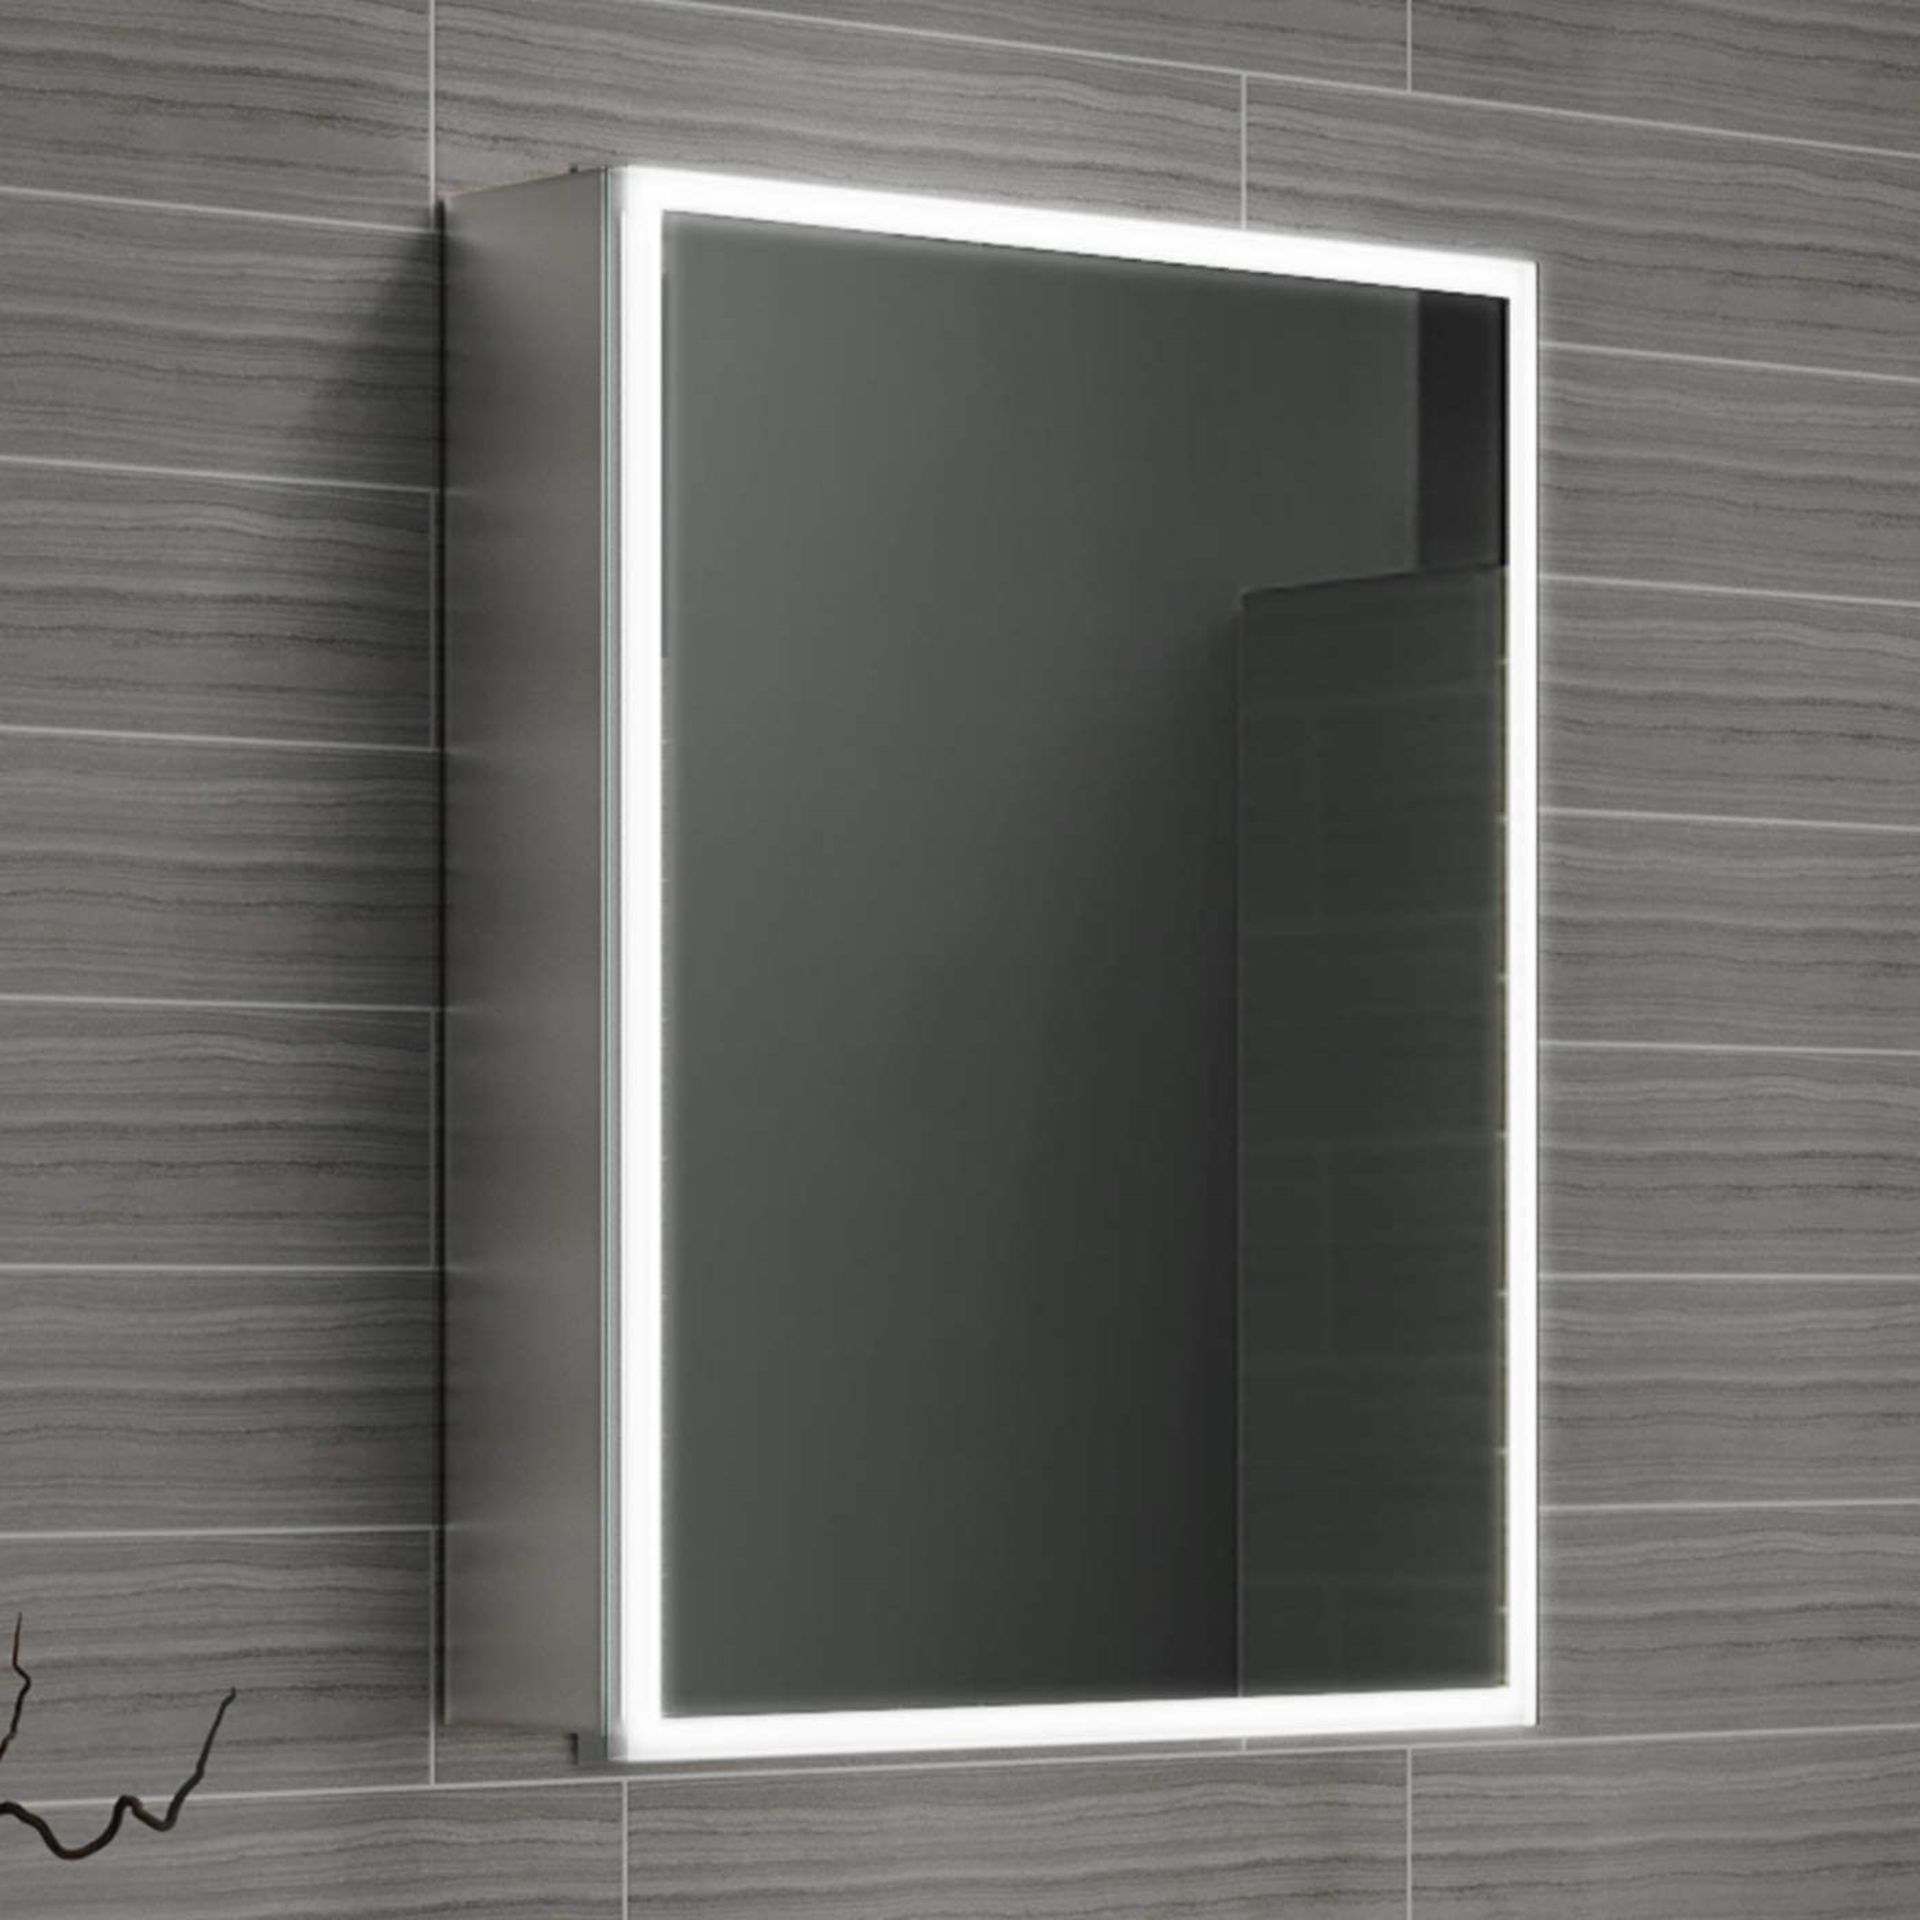 NEW 450x600 Cosmic Illuminated LED Mirror Cabinet. RRP £499.99.MC161.We love this mirror cabi... - Image 2 of 2